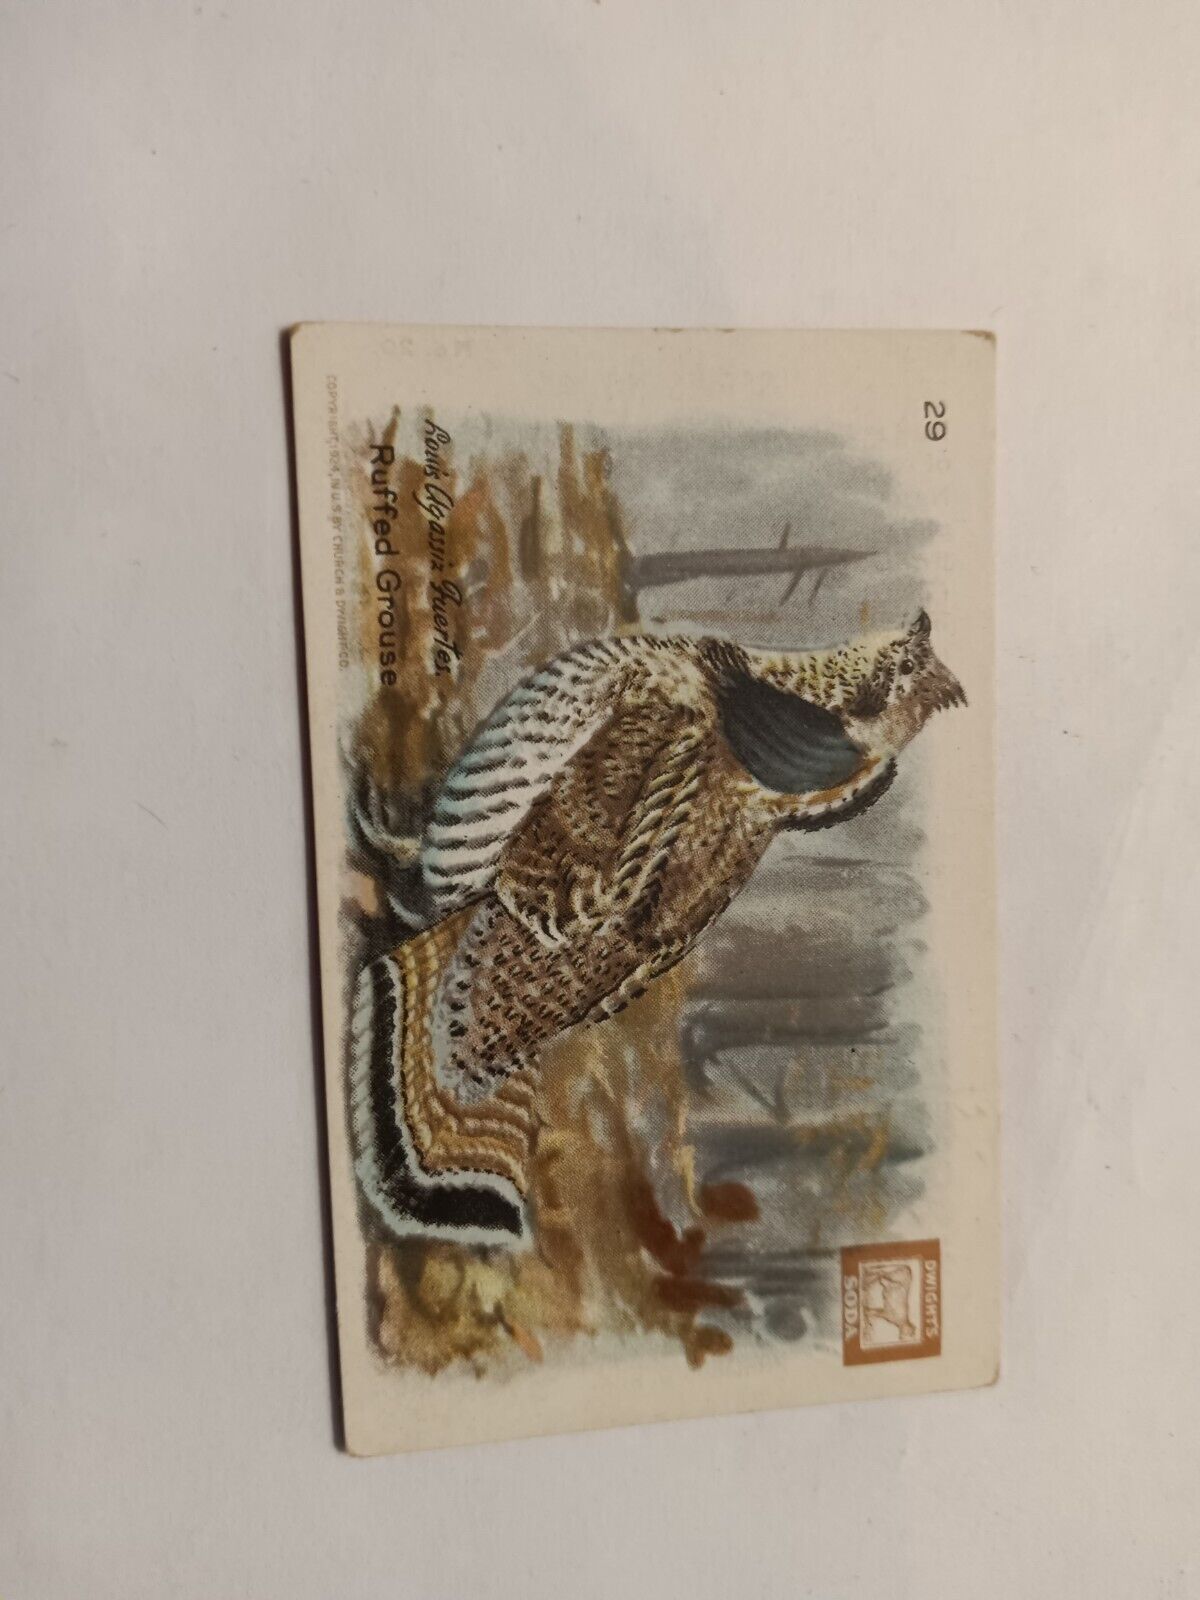 Vintage Church & Dwight's Soda Birds Series 4 Card No 29 Ruffed Grouse